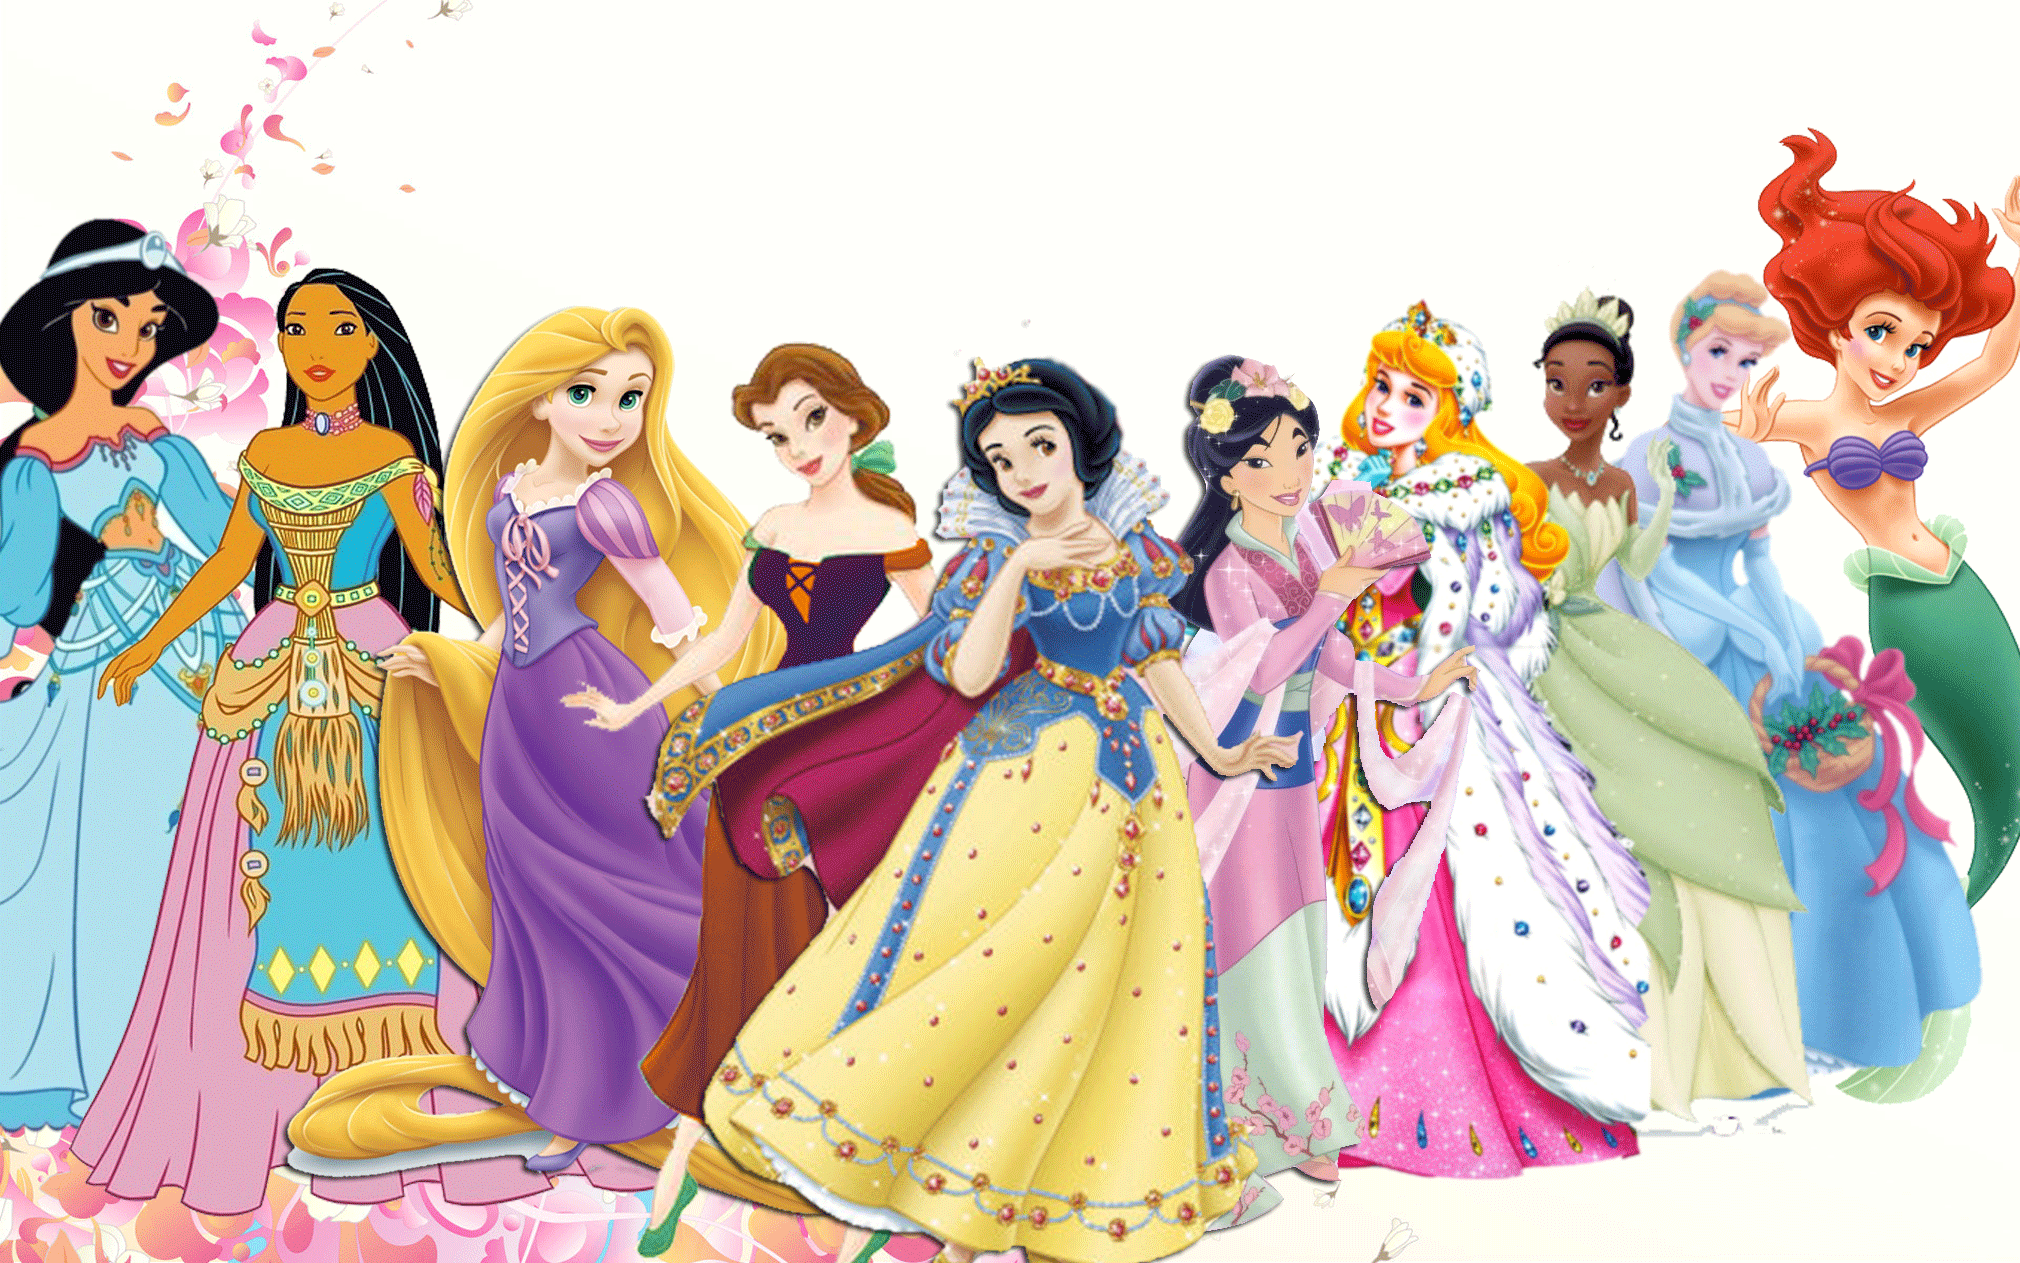 disney princess costumes picture, disney princess costumes